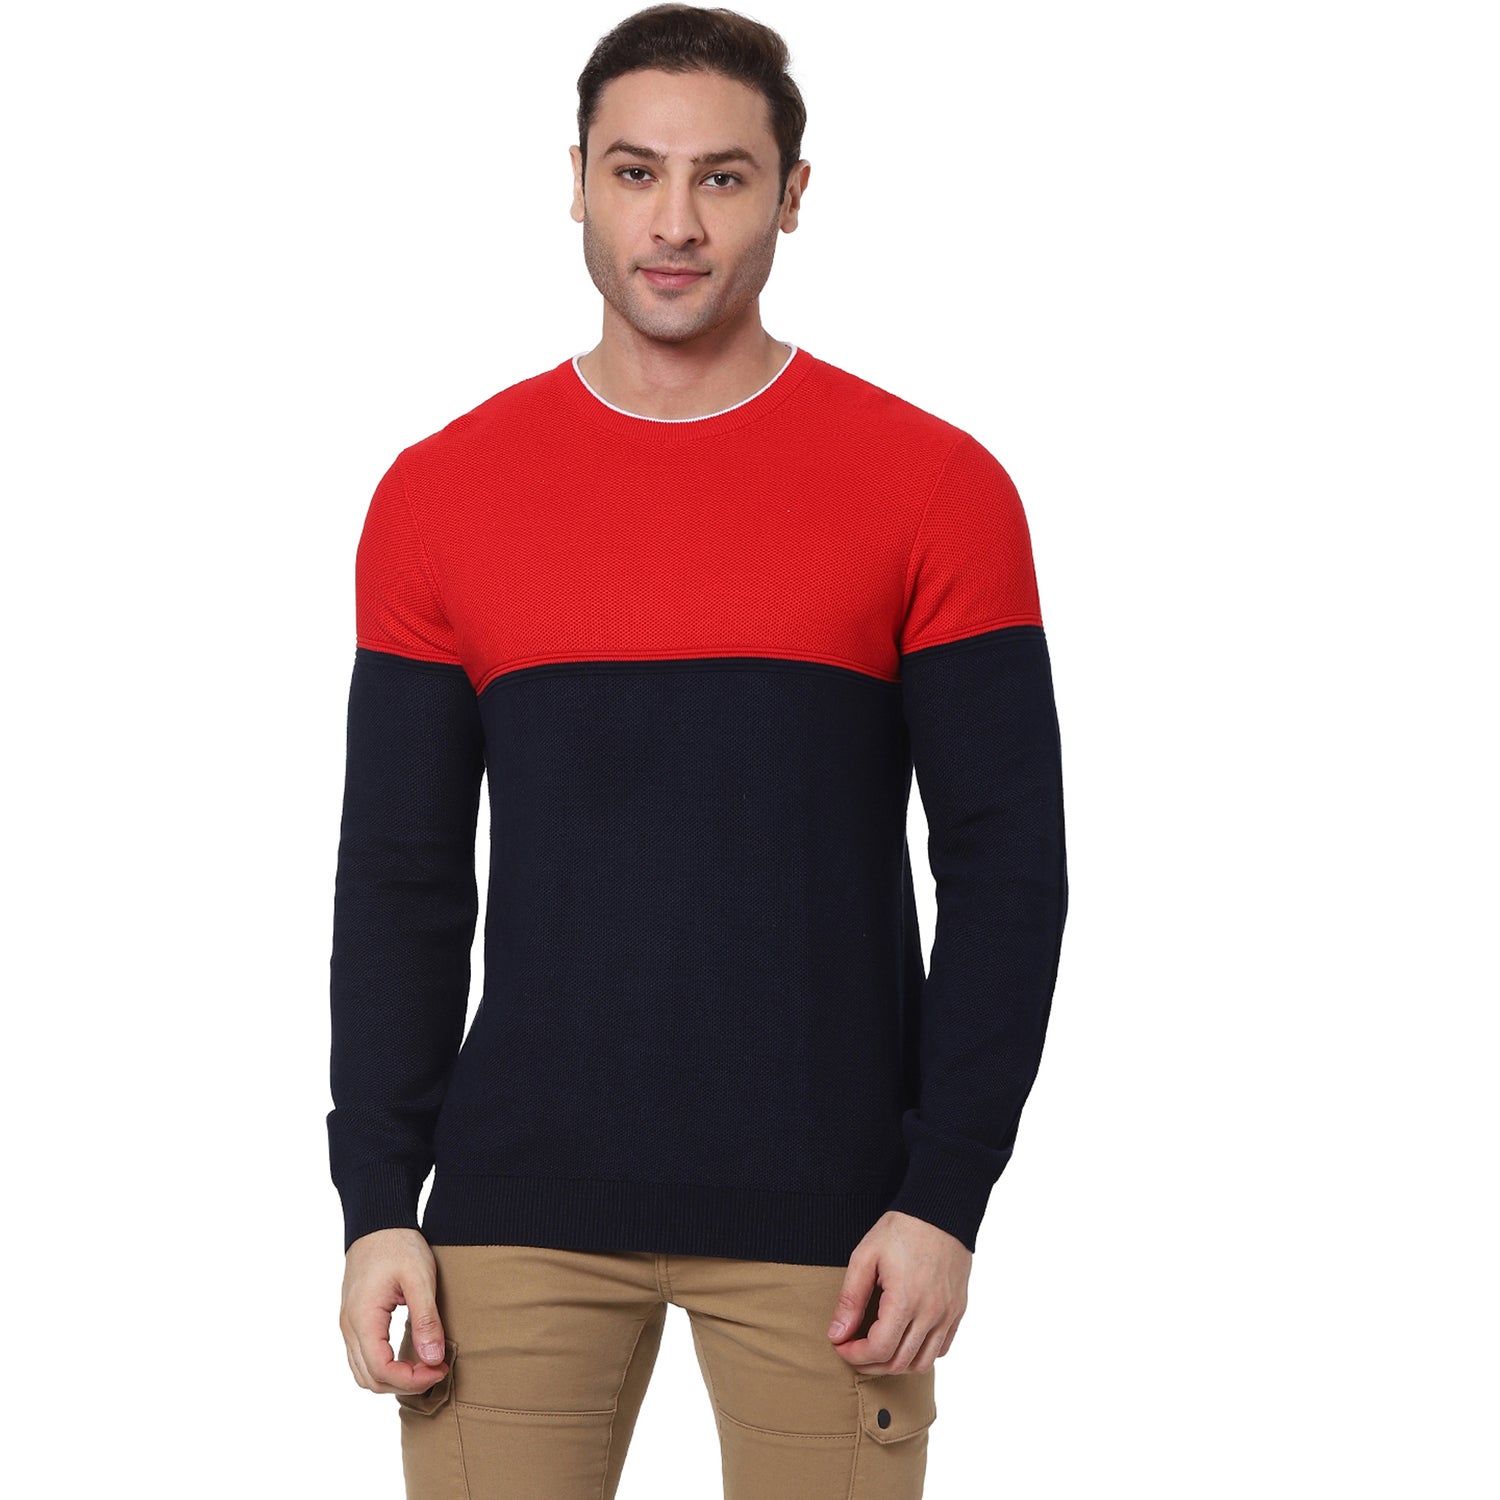 Navy Blue and Red Colourblocked Cotton Pullover Sweater (VEBLOCKI)